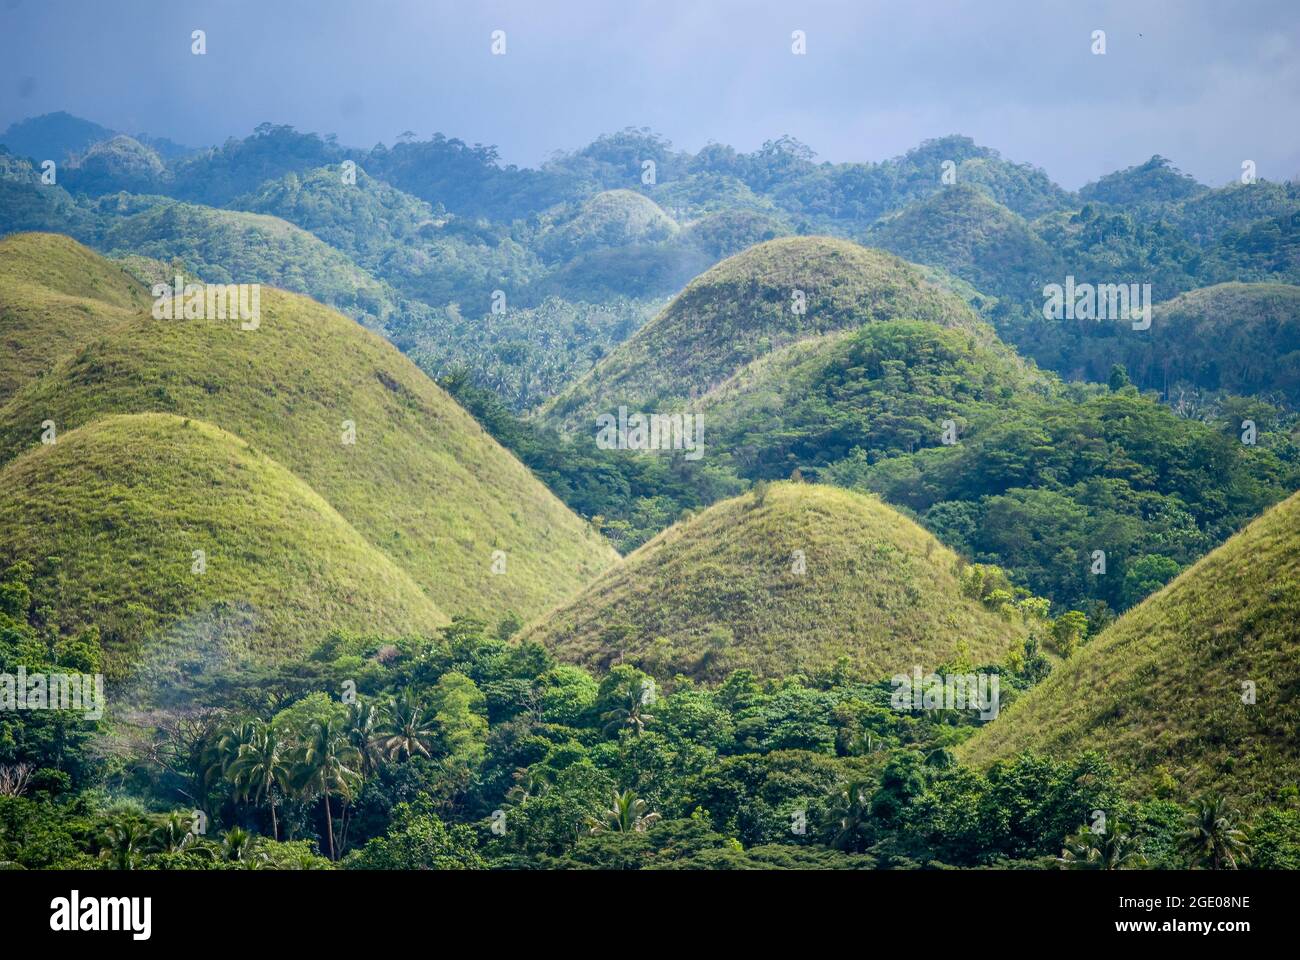 Las Colinas de Chocolate monumento geológico nacional, Carmen, Bohol, Visayas, Filipinas Foto de stock